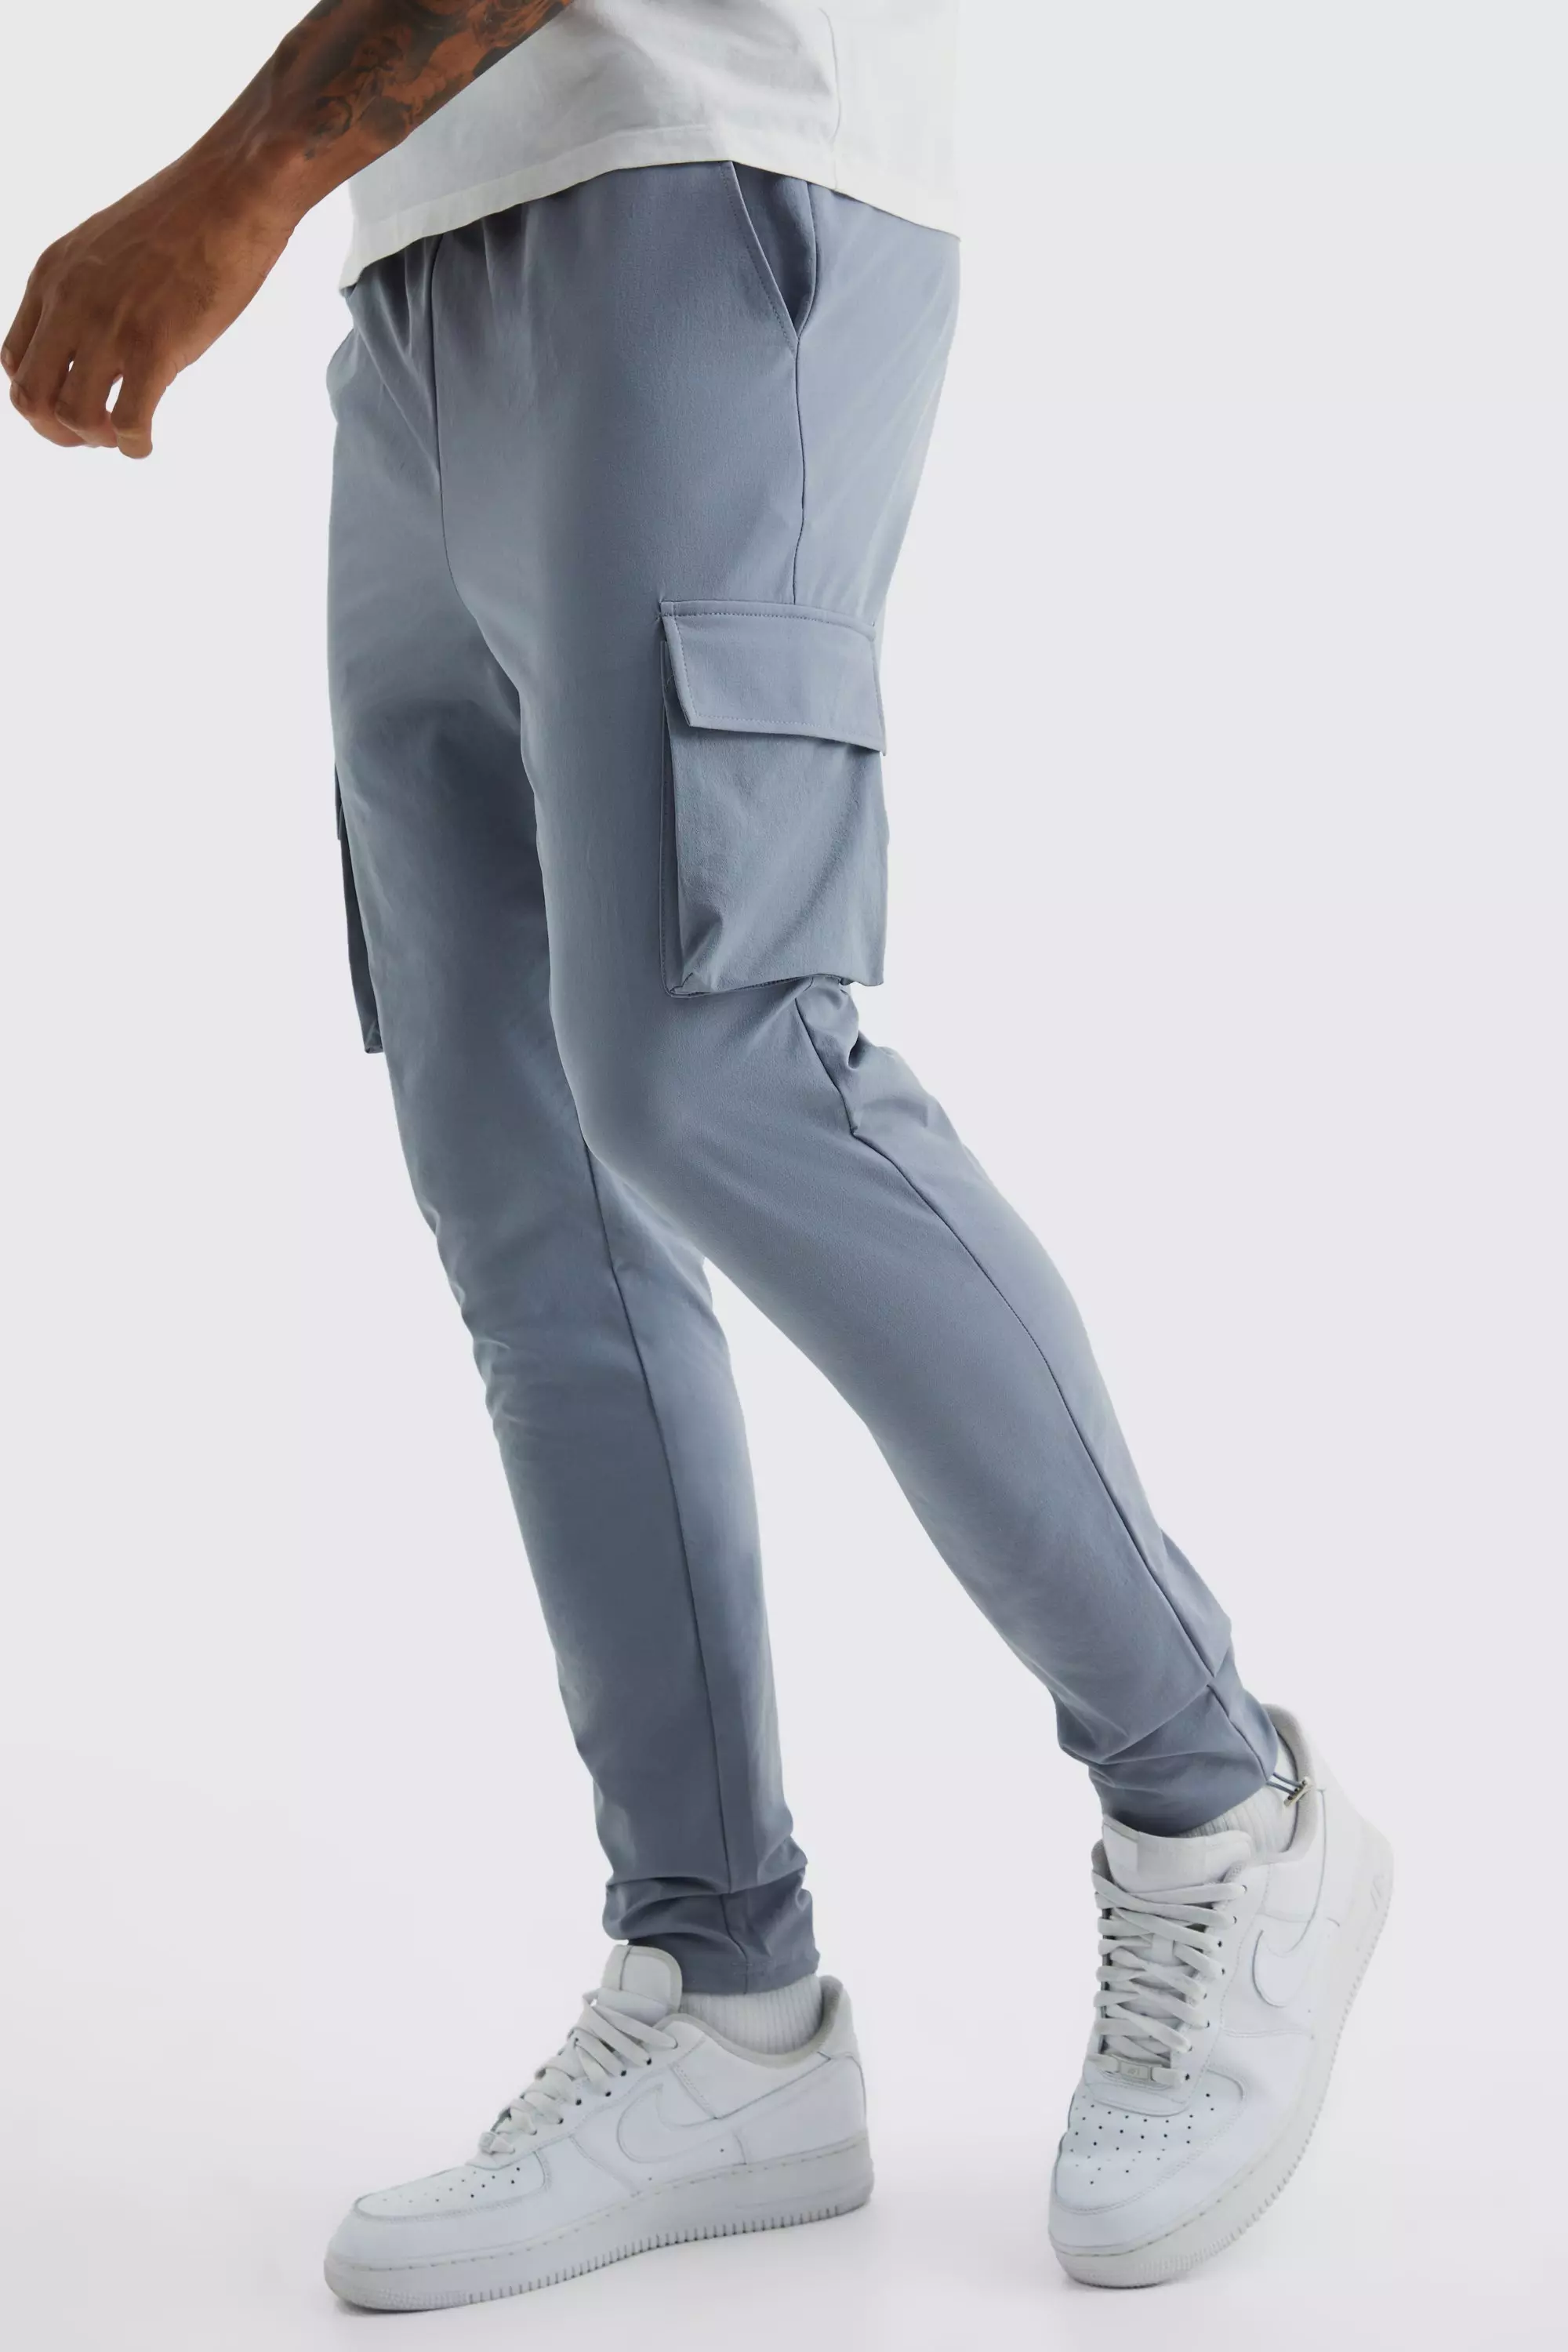 Grey Tall Elastic Lightweight Stretch Skinny Cargo Pants